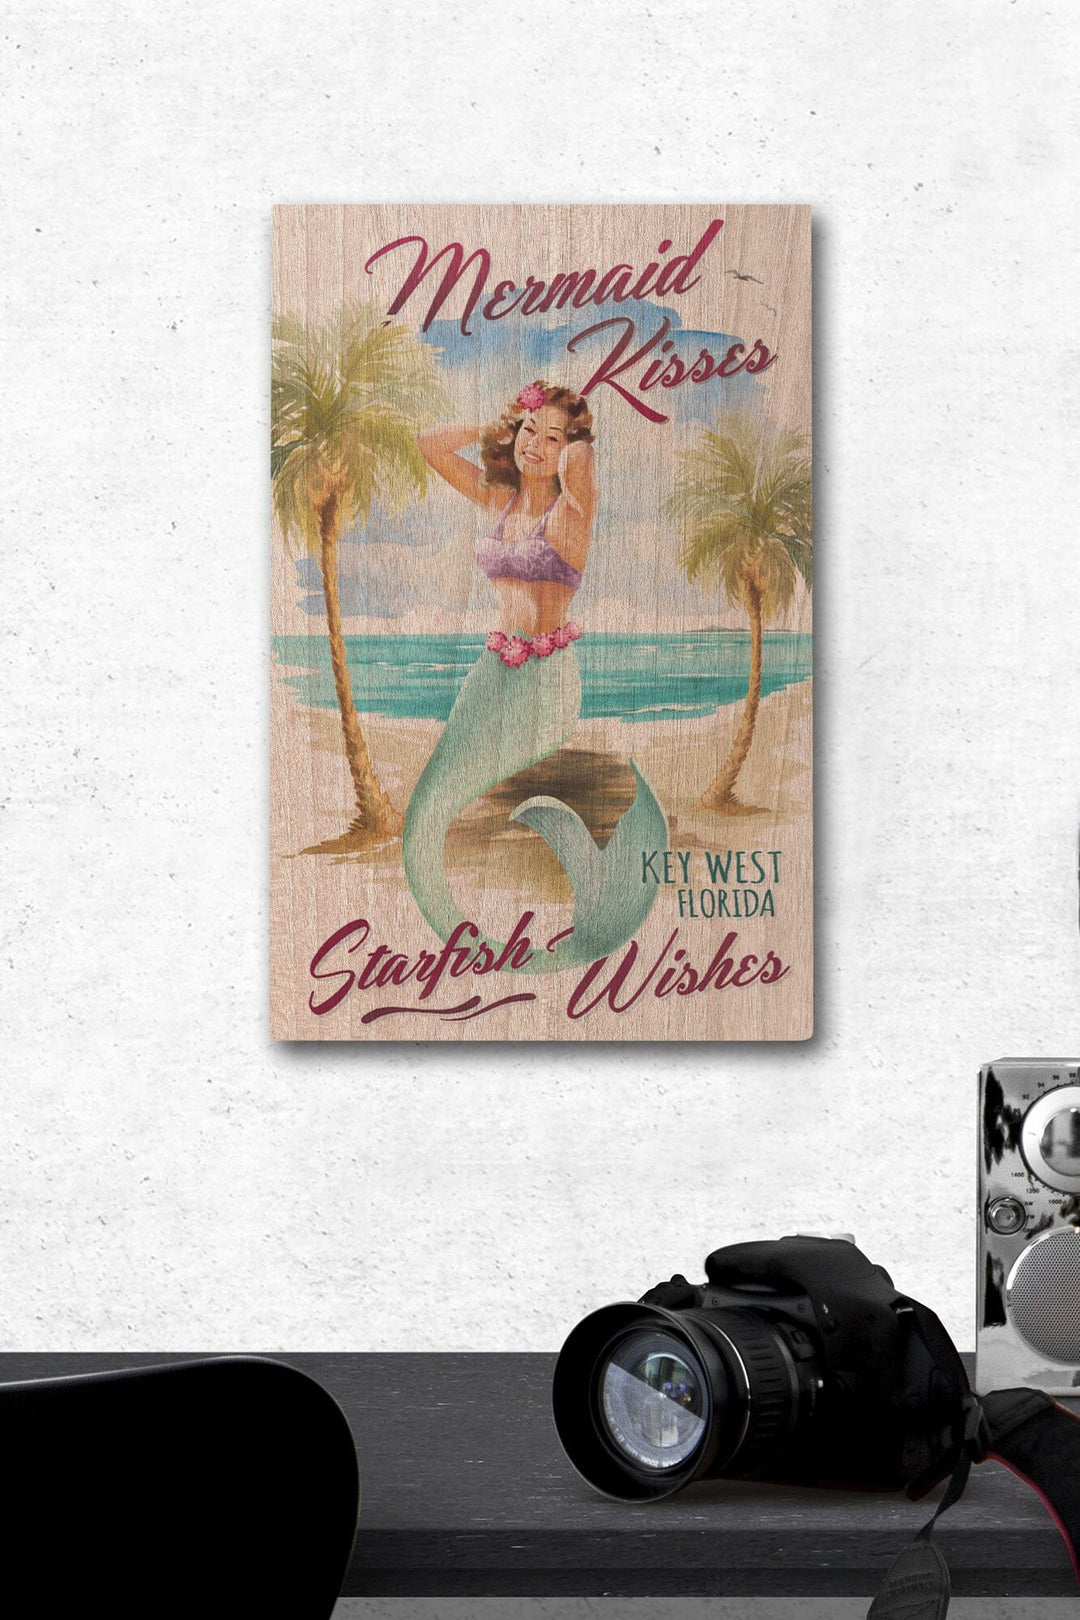 Key West, Florida, Mermaid Kisses & Starfish Wishes, Watercolor, Lantern Press Artwork, Wood Signs and Postcards Wood Lantern Press 12 x 18 Wood Gallery Print 